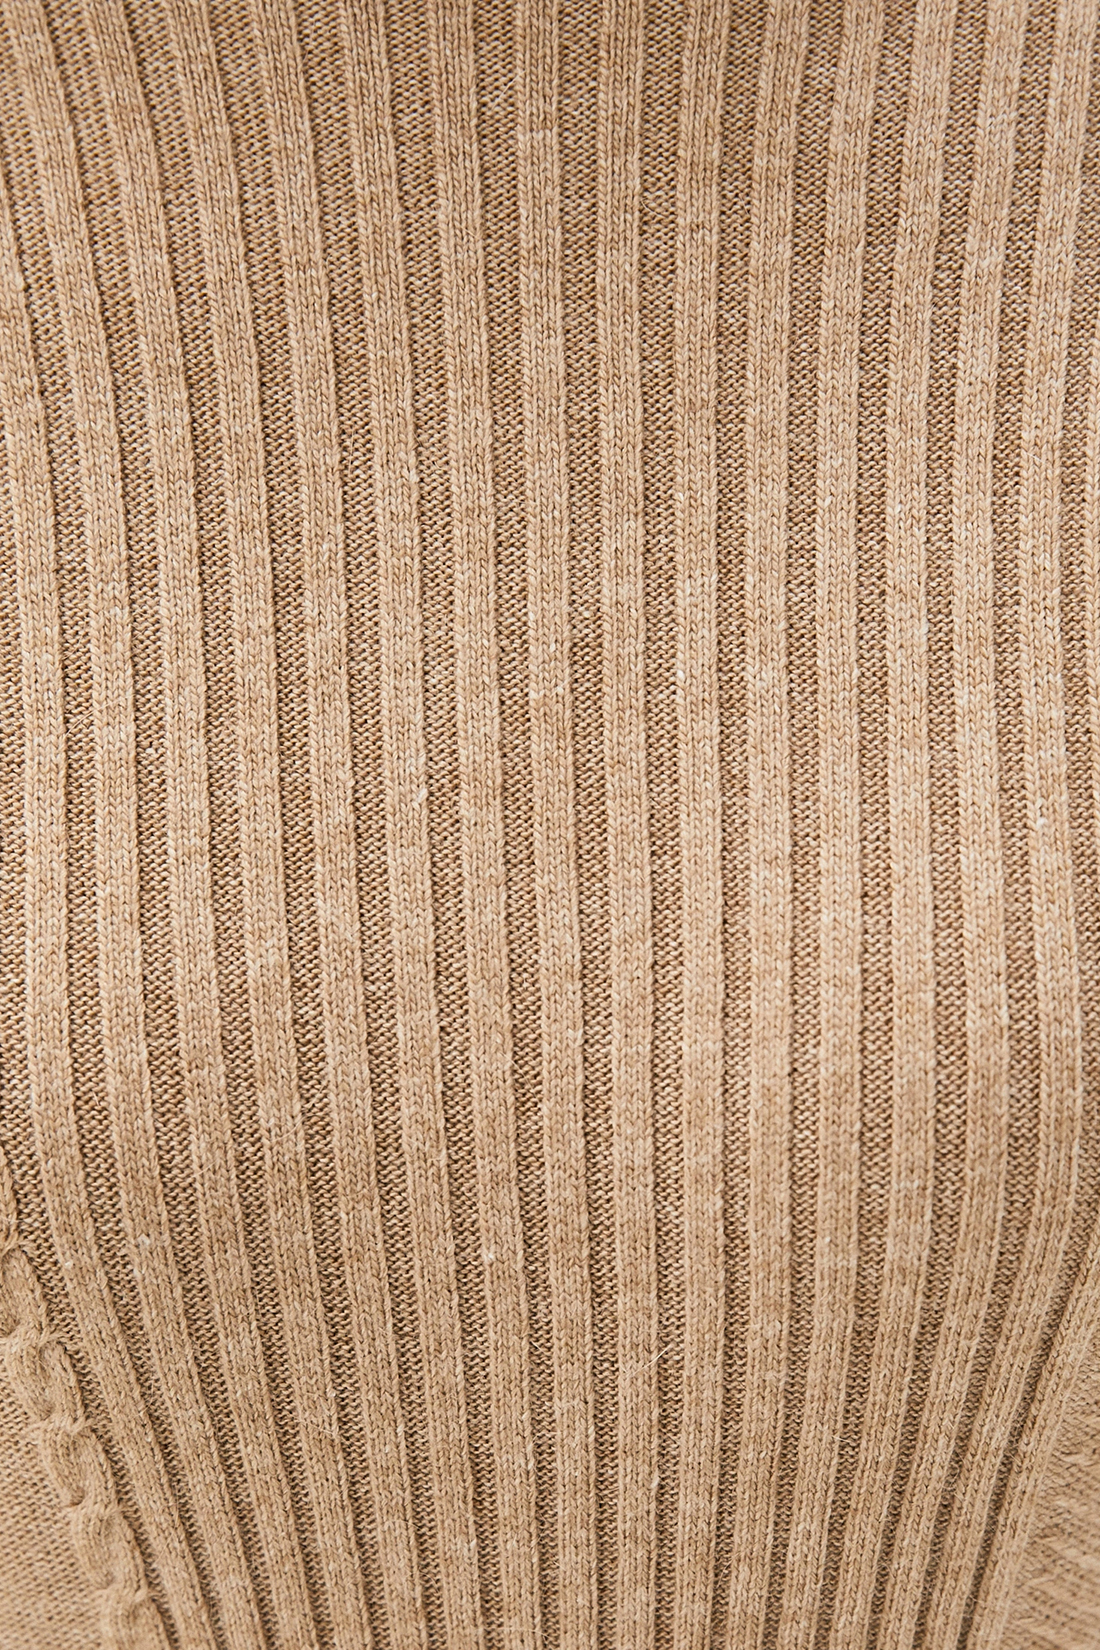 Джемпер с узором (арт. baon B130630), размер XS, цвет deep beige melange#бежевый Джемпер с узором (арт. baon B130630) - фото 3